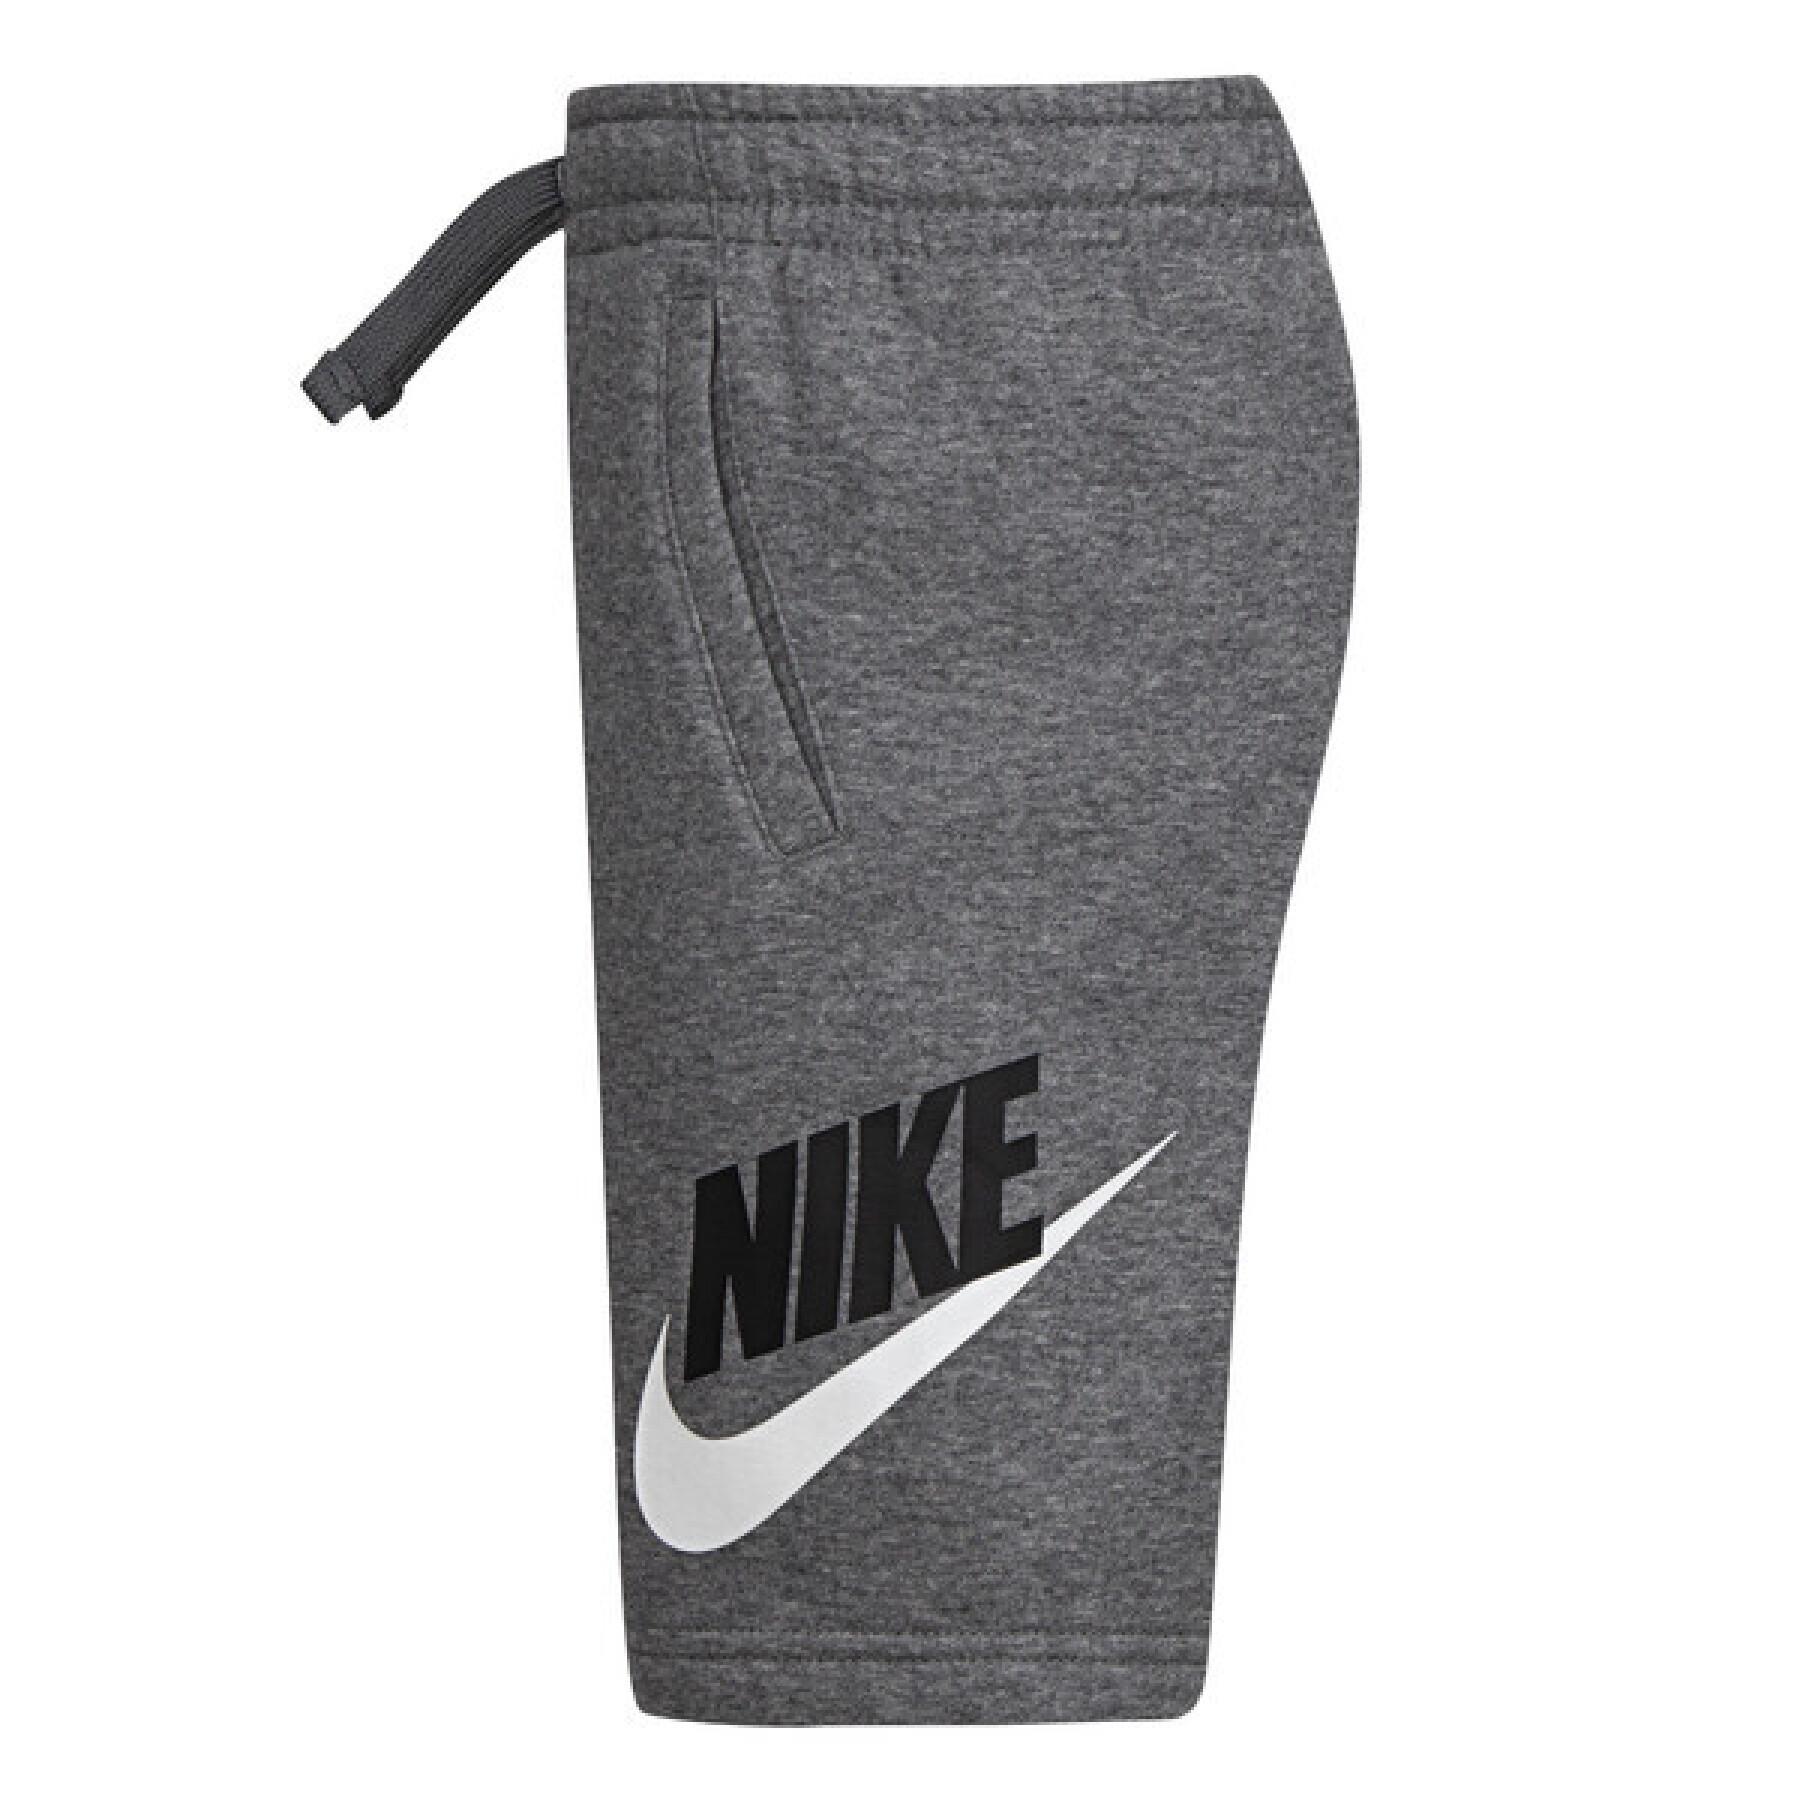 FT Nike Nike - Children\'s - Lifestyle Club shorts - Brands HBR